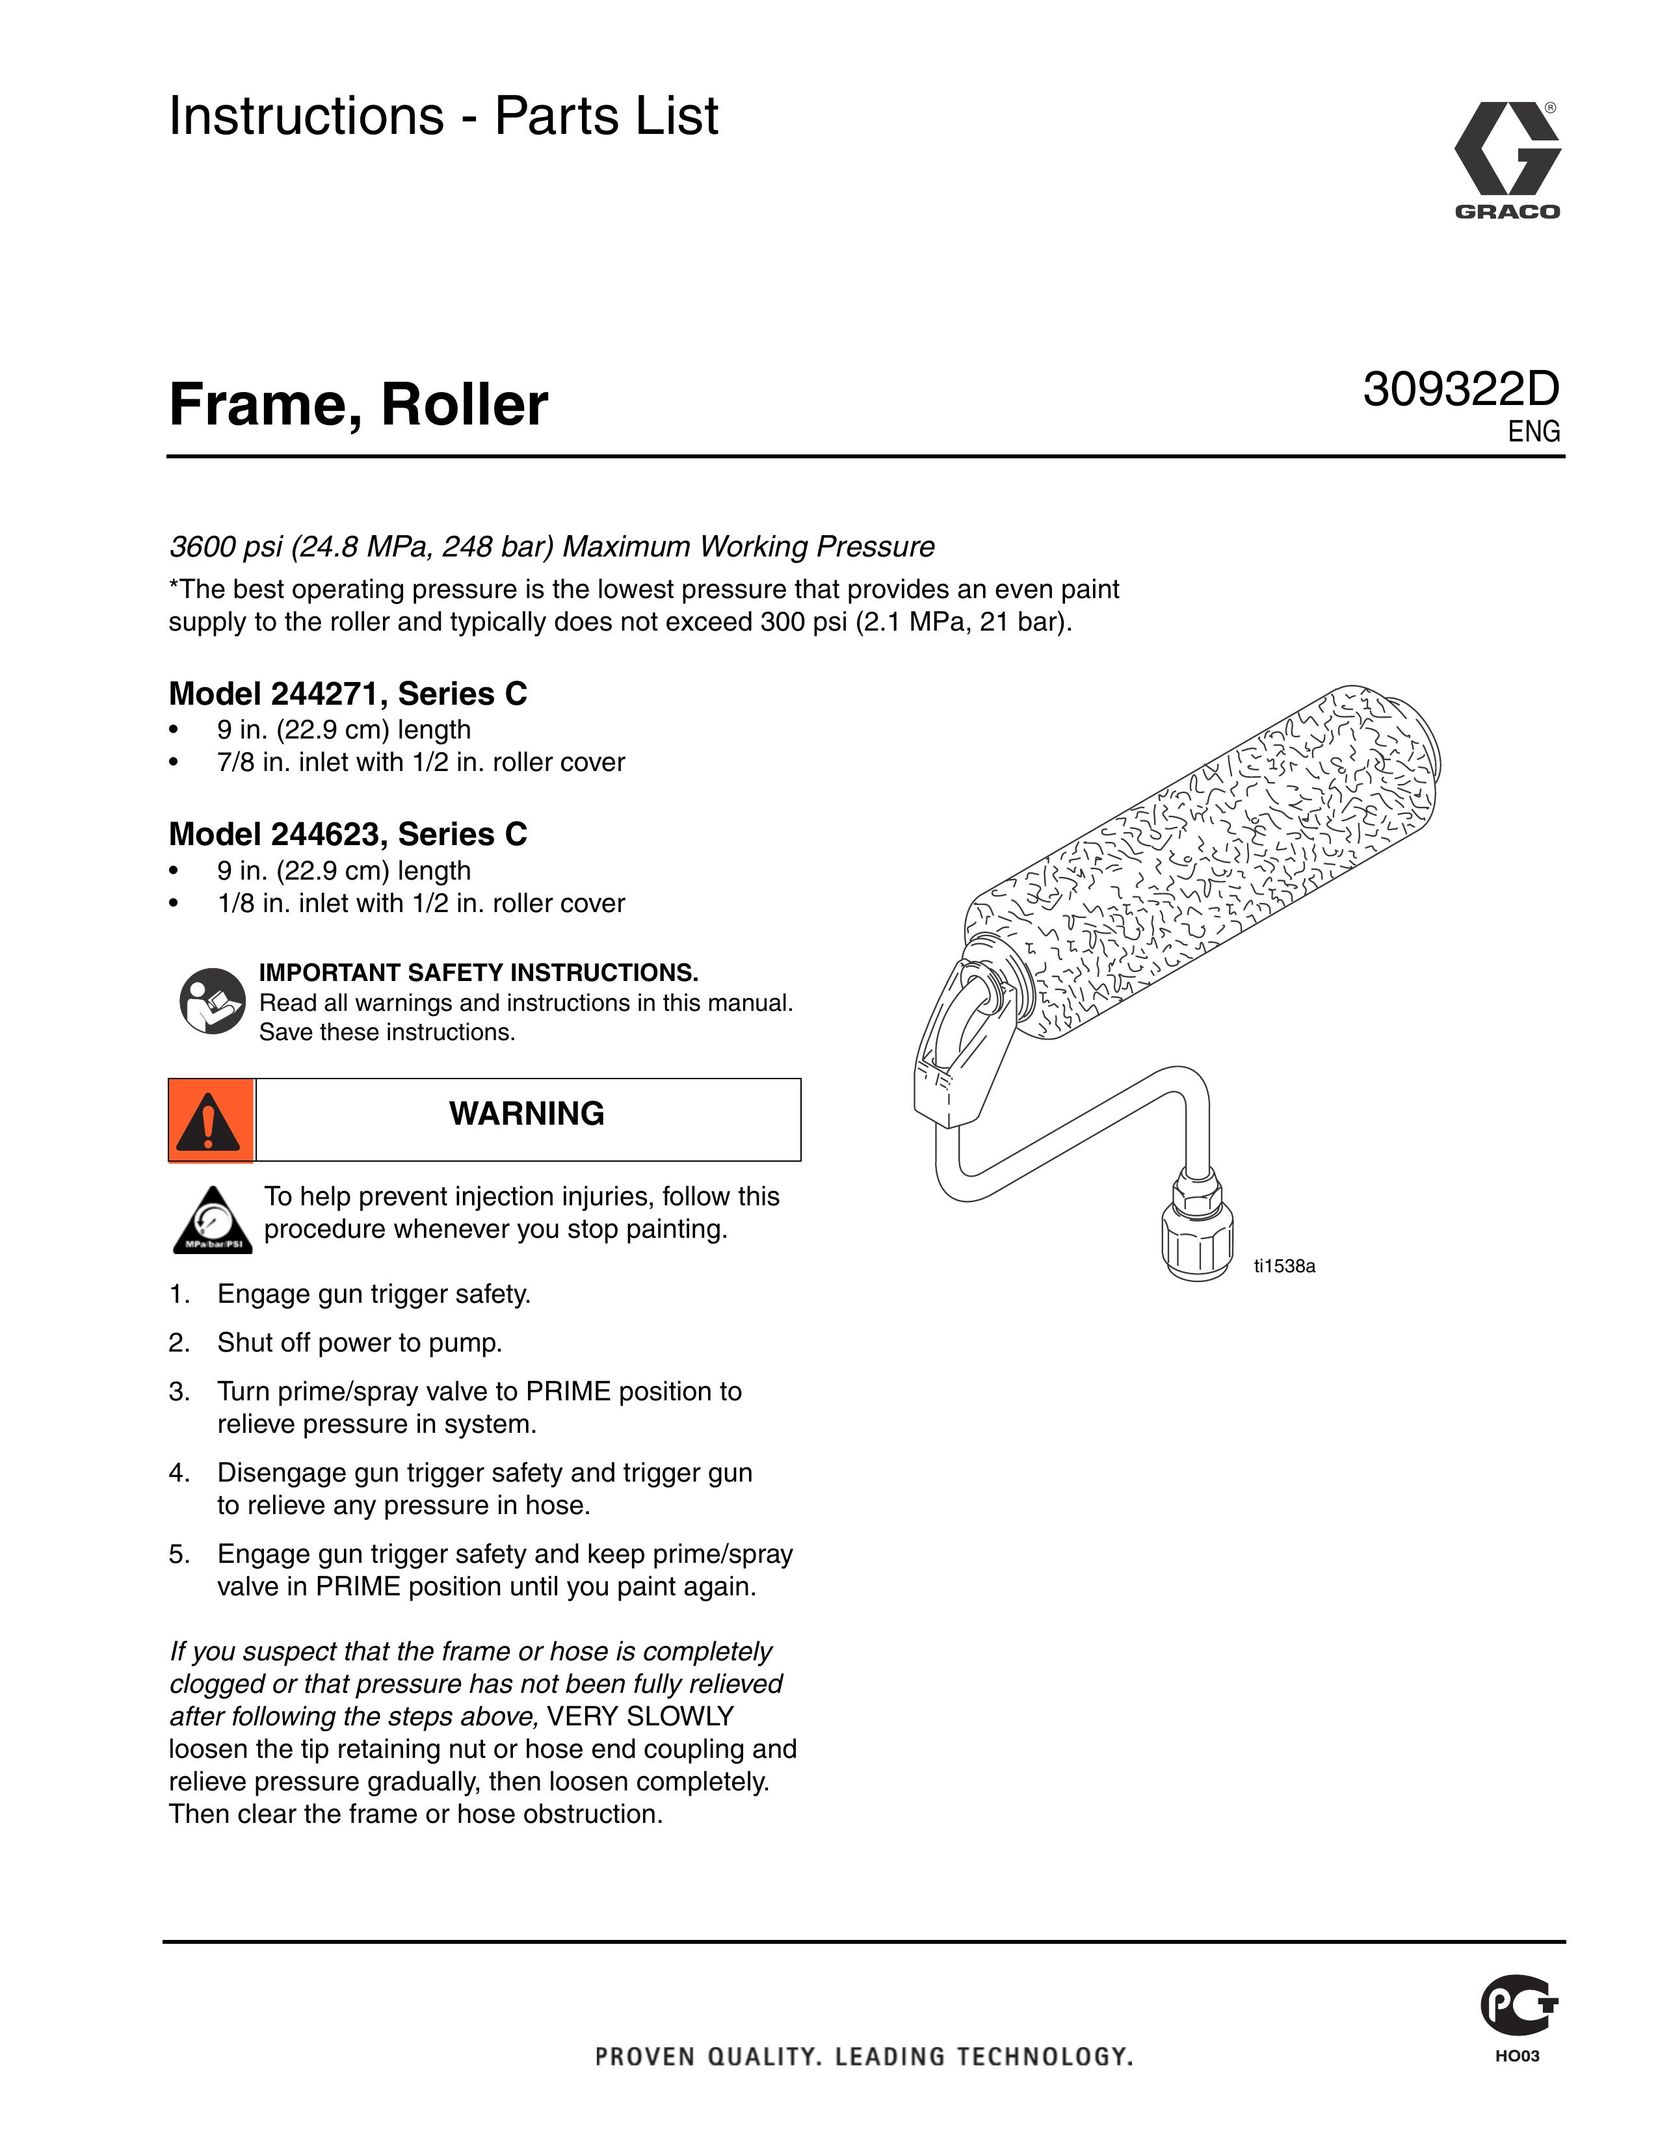 Graco Inc. 309322D Power Roller User Manual